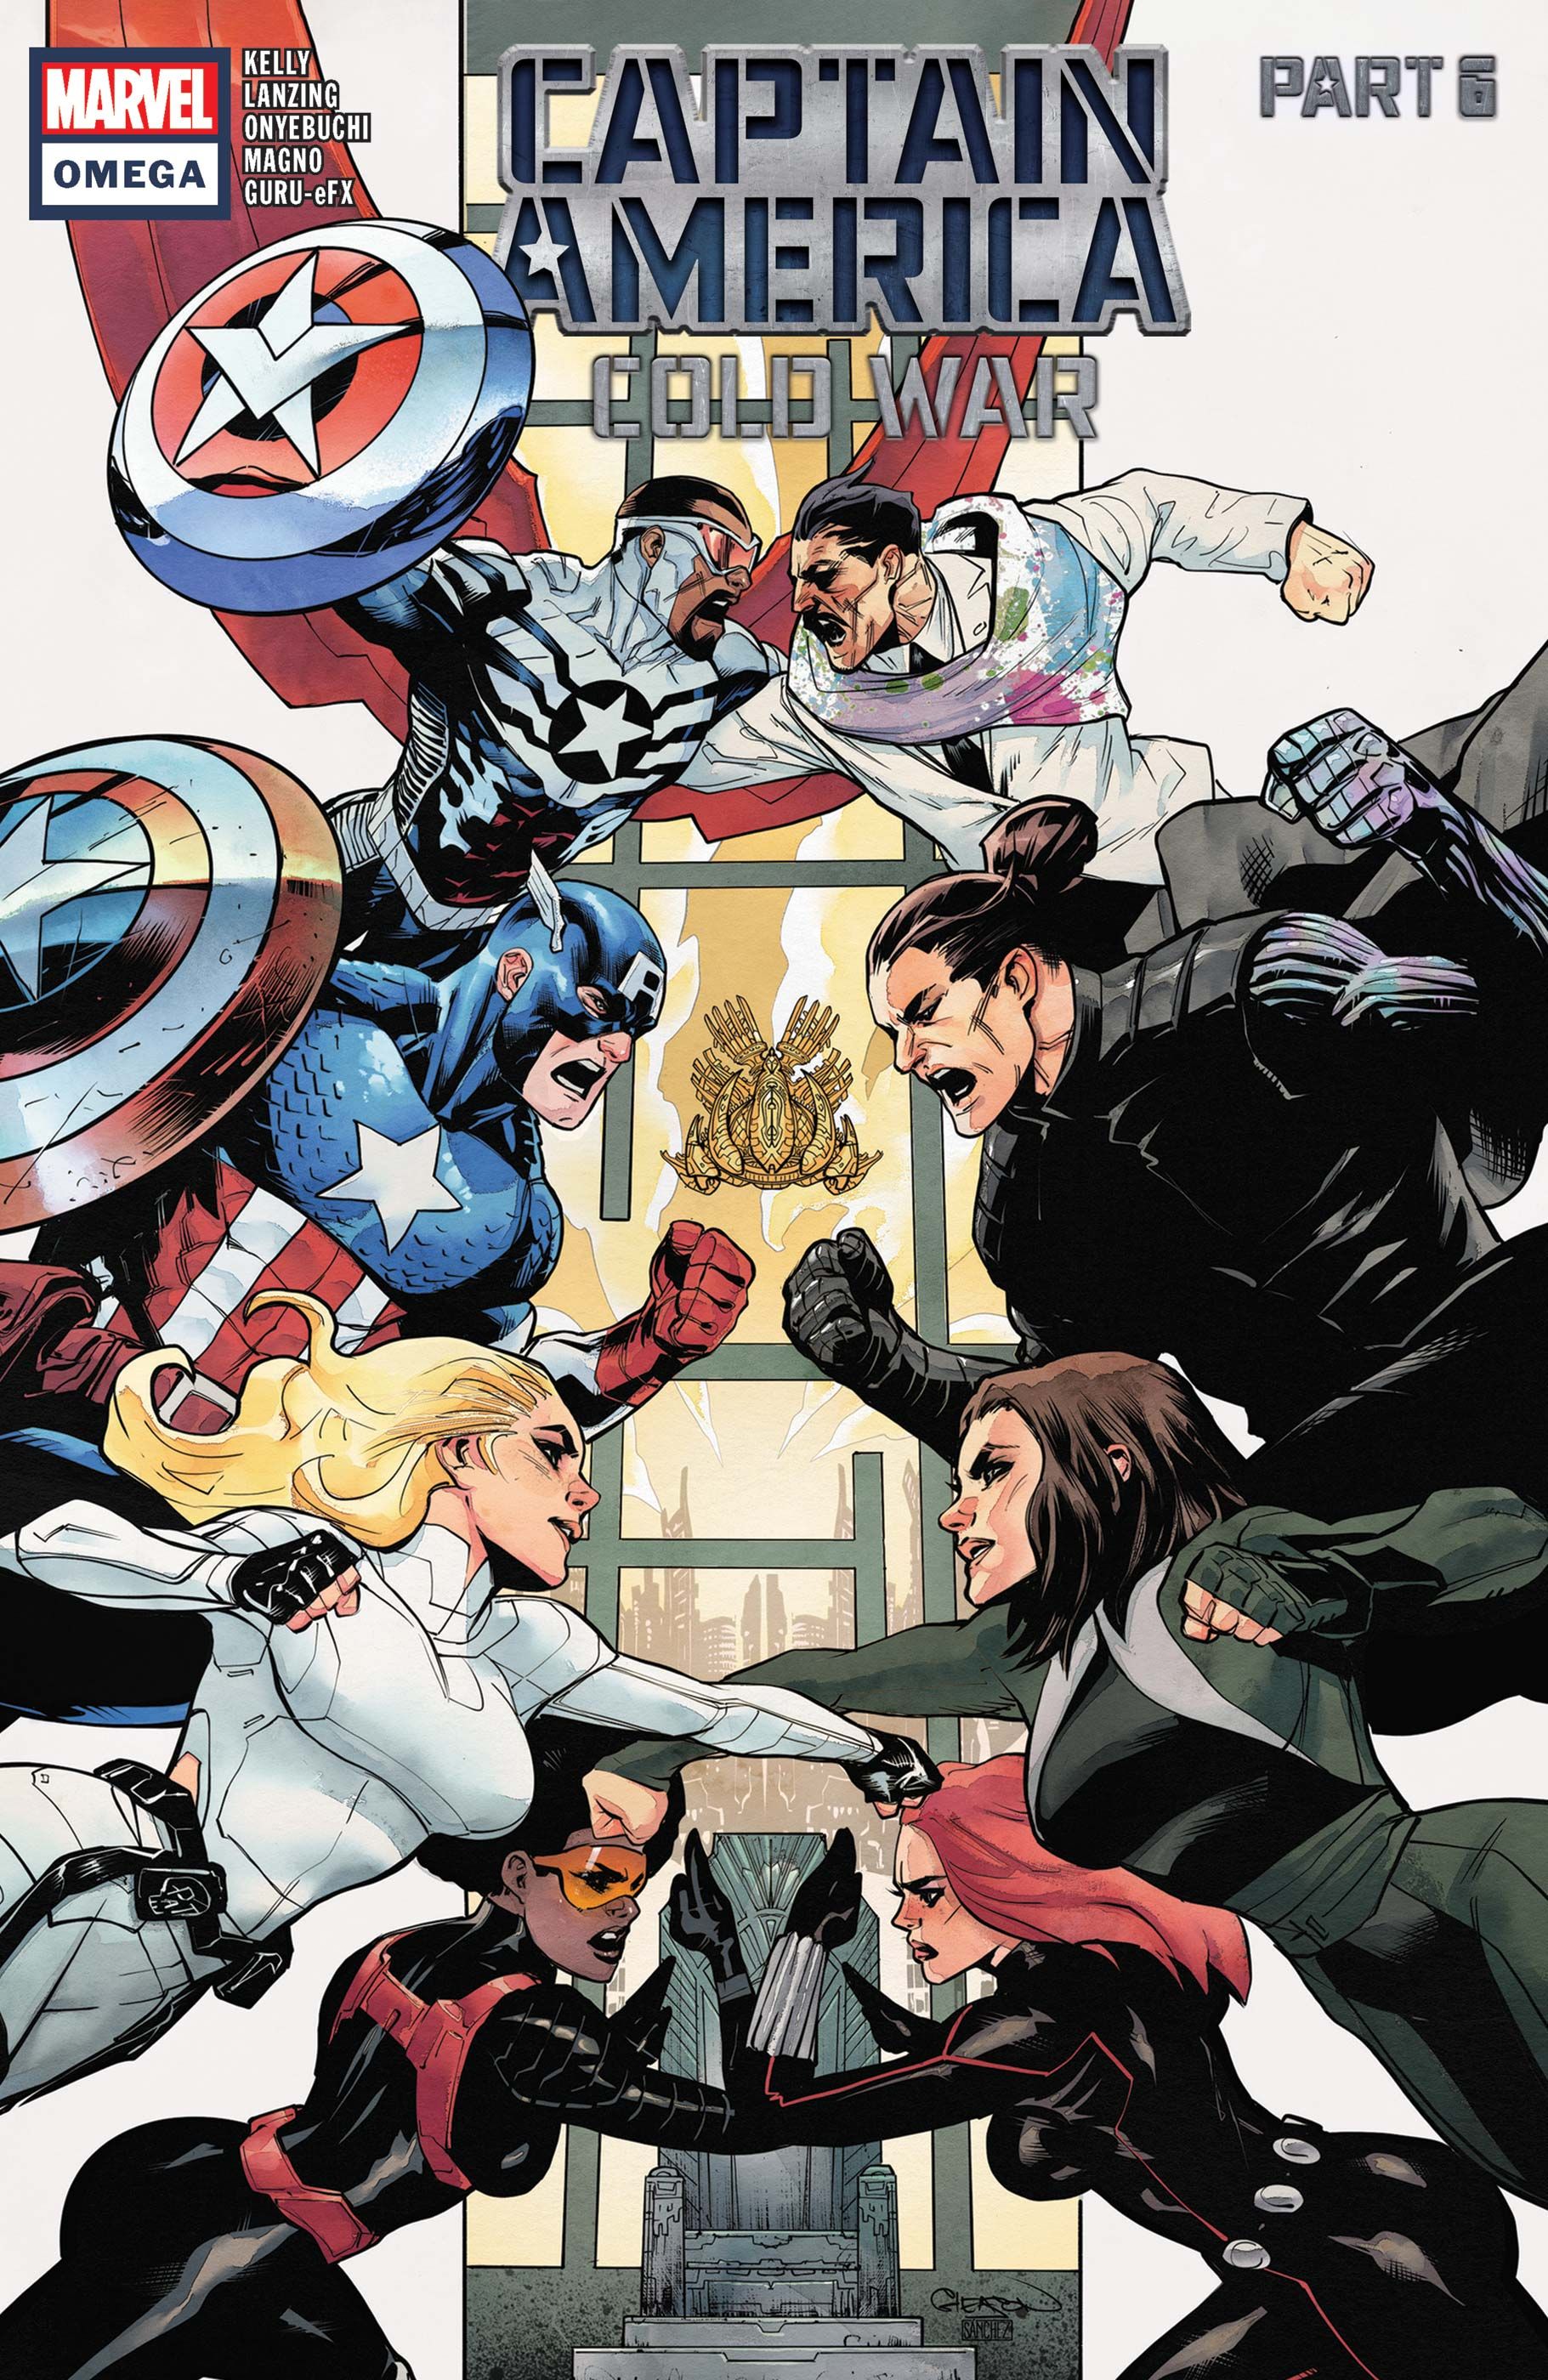 Captain America Cold War Omega #1